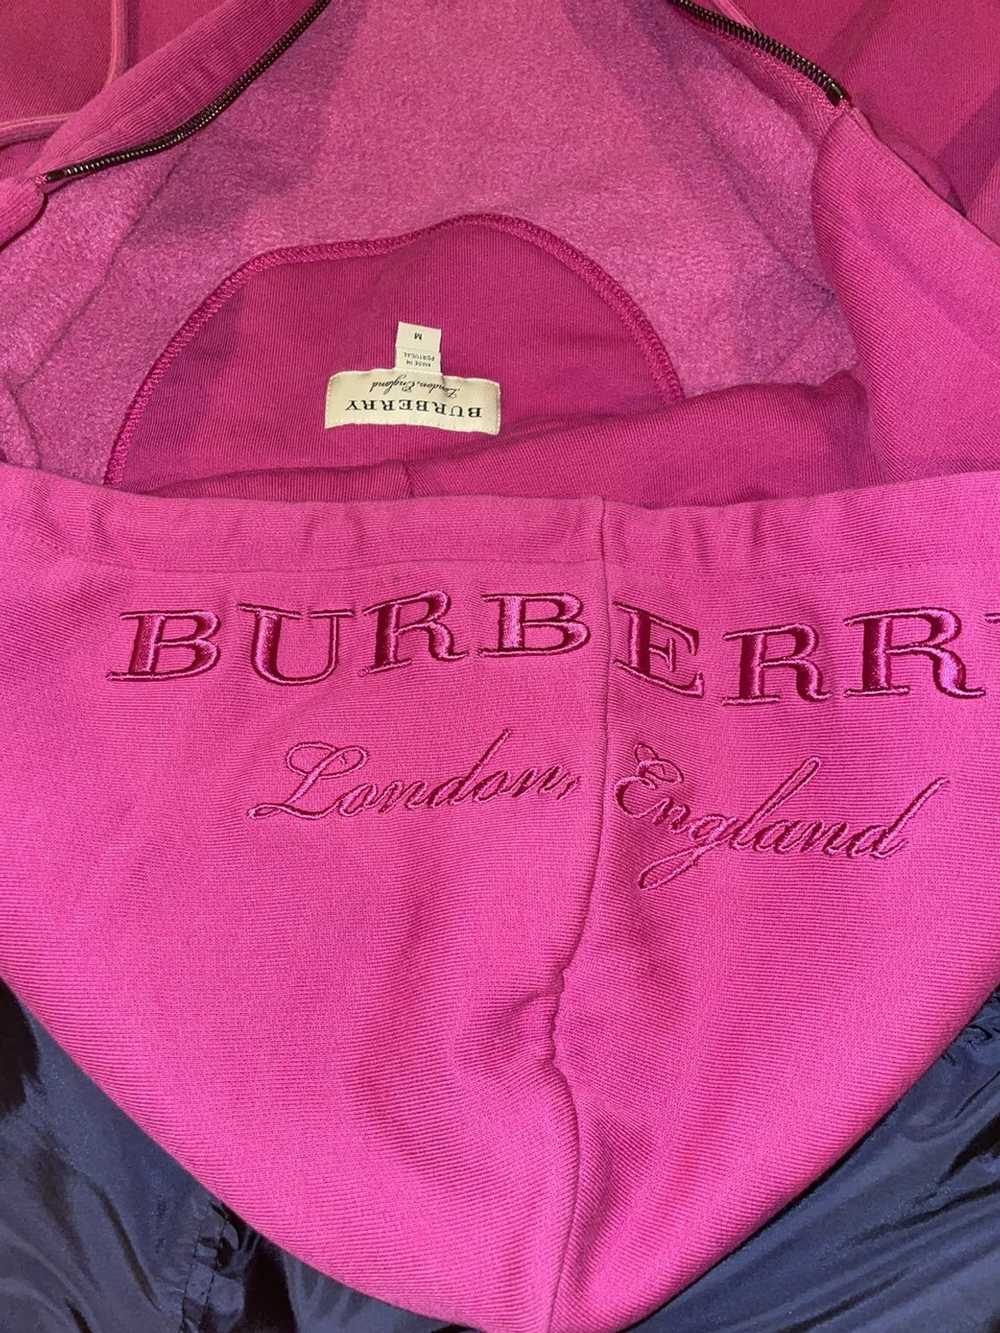 Burberry Burberry hoodie - image 2